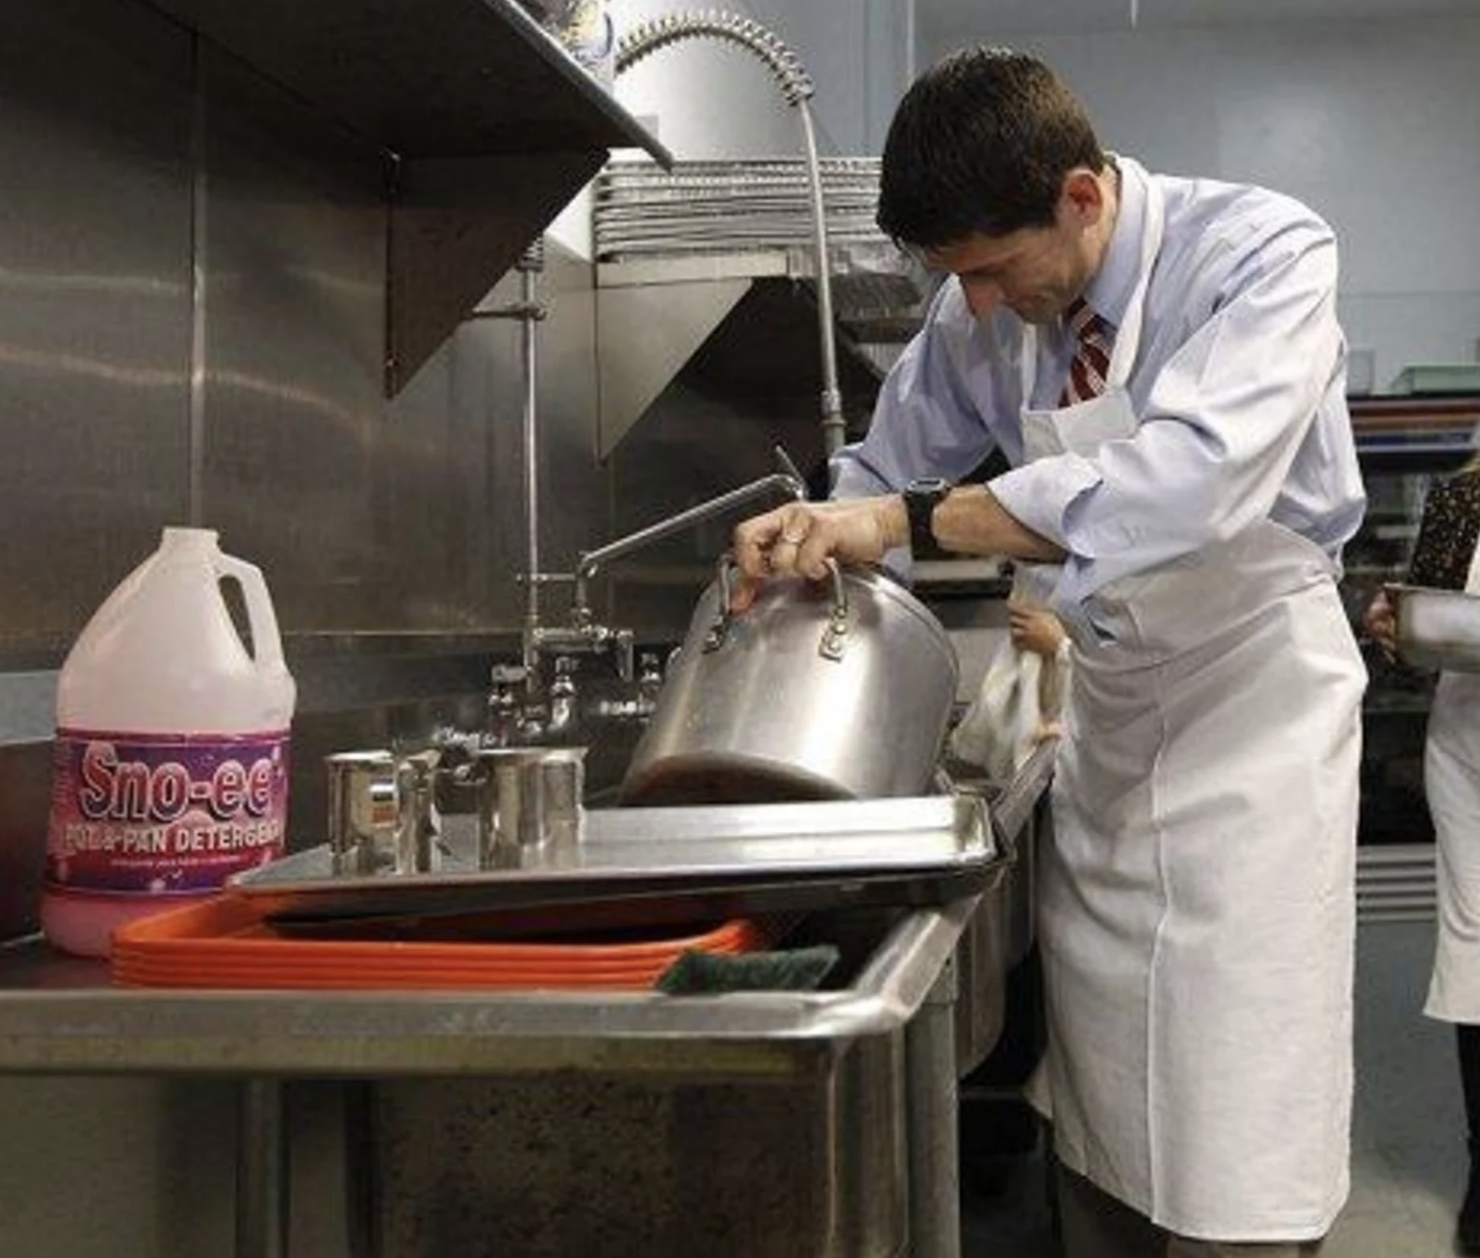 paul ryan washing dishes